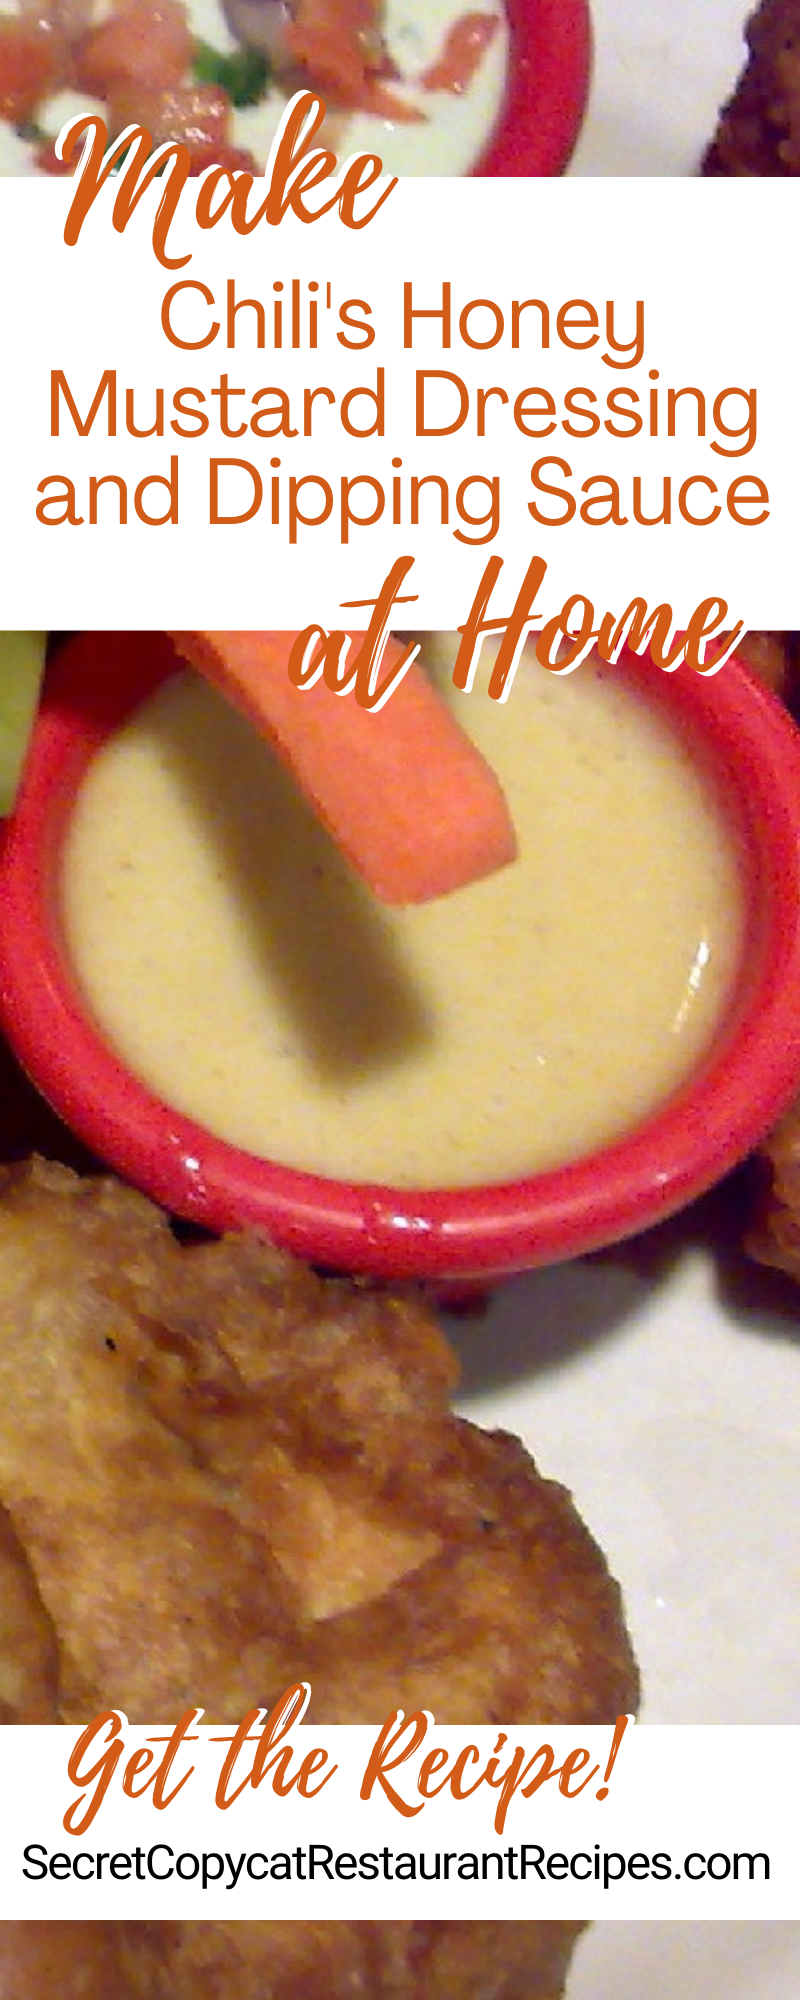 Chili's Honey Mustard Dressing and Dipping Sauce Recipe